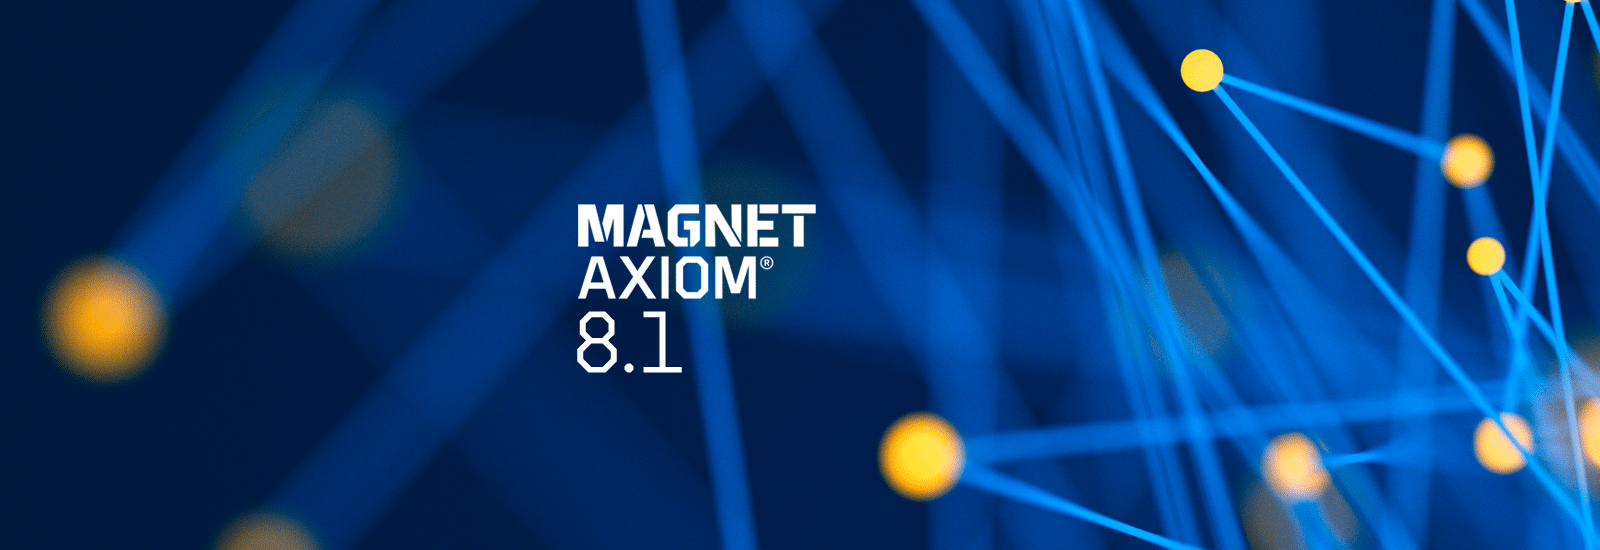 Magnet Axiom 8.1